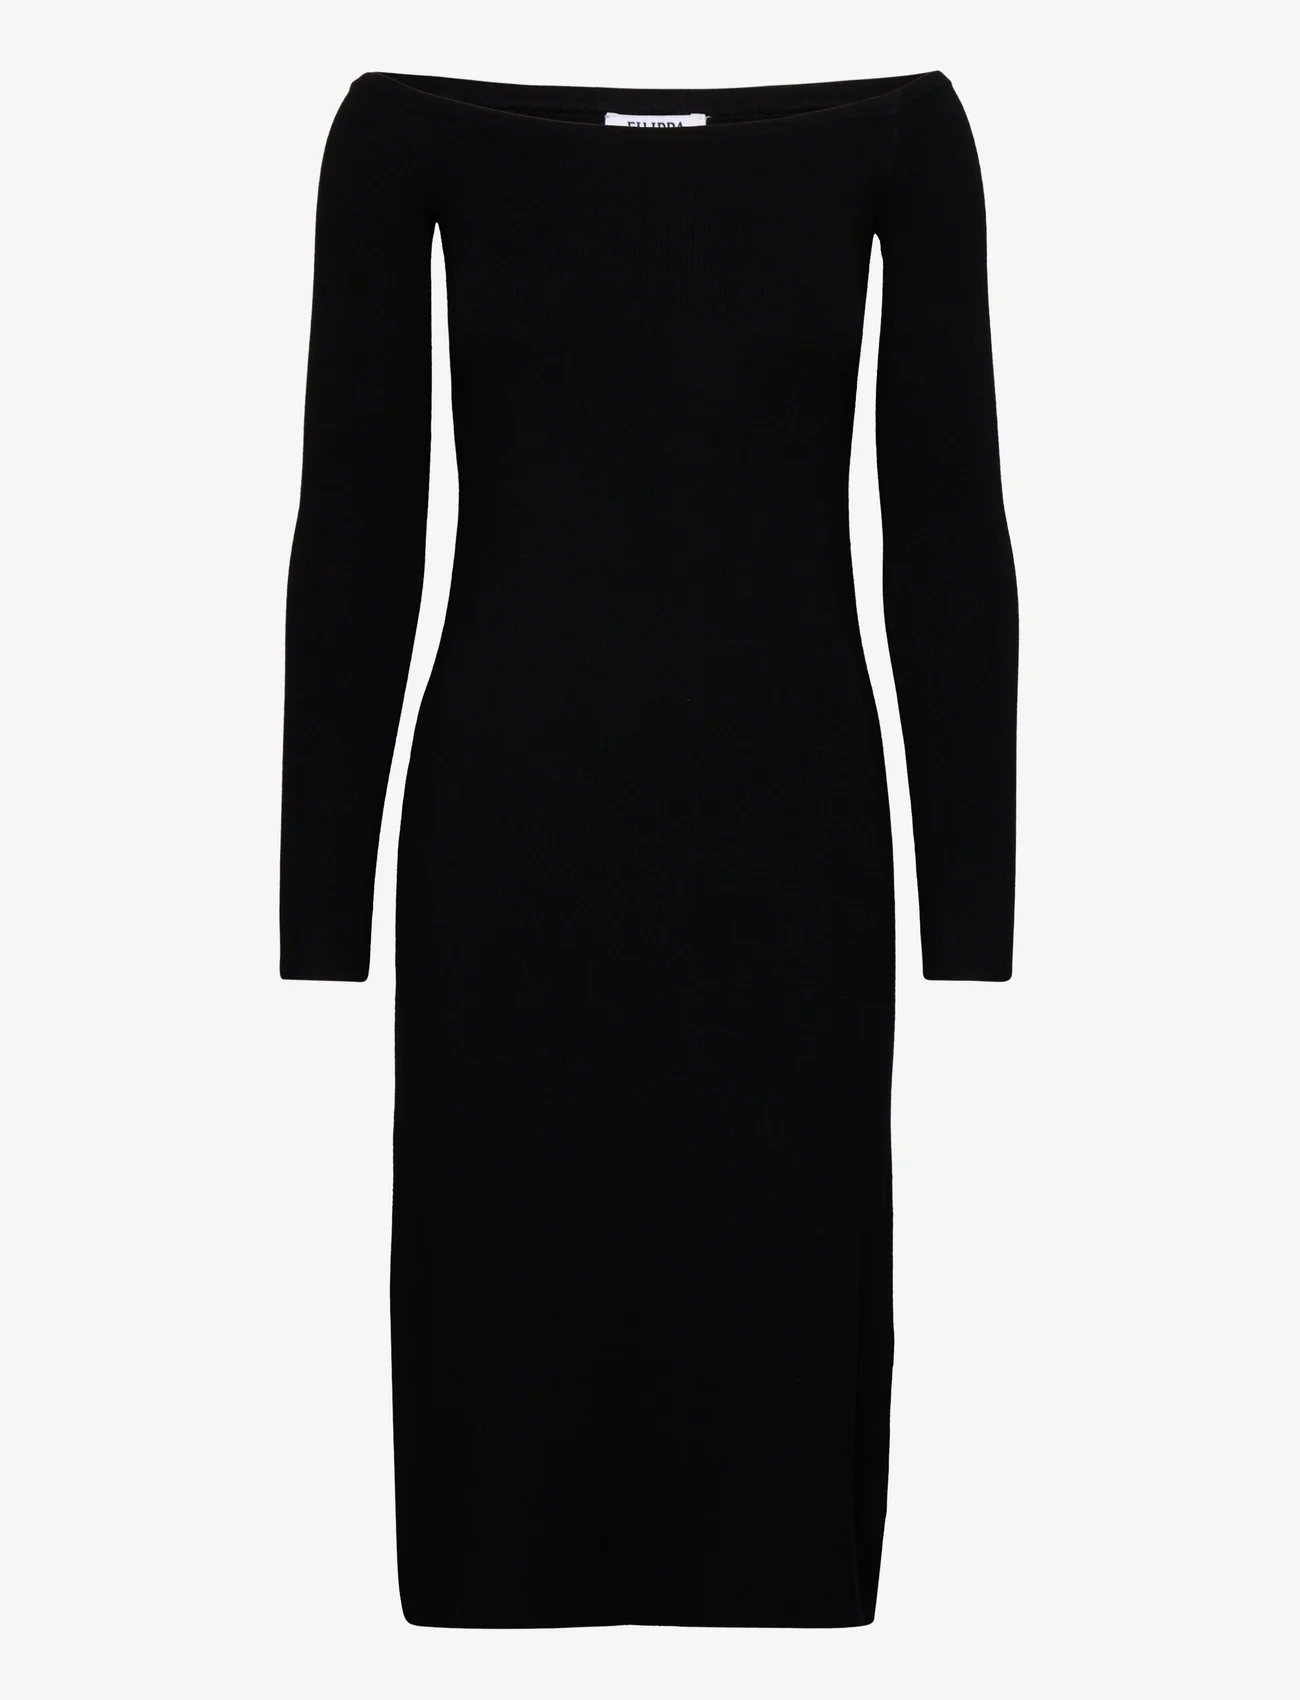 Filippa K - Off Shoulder Knit Dress - kotelomekot - black - 0